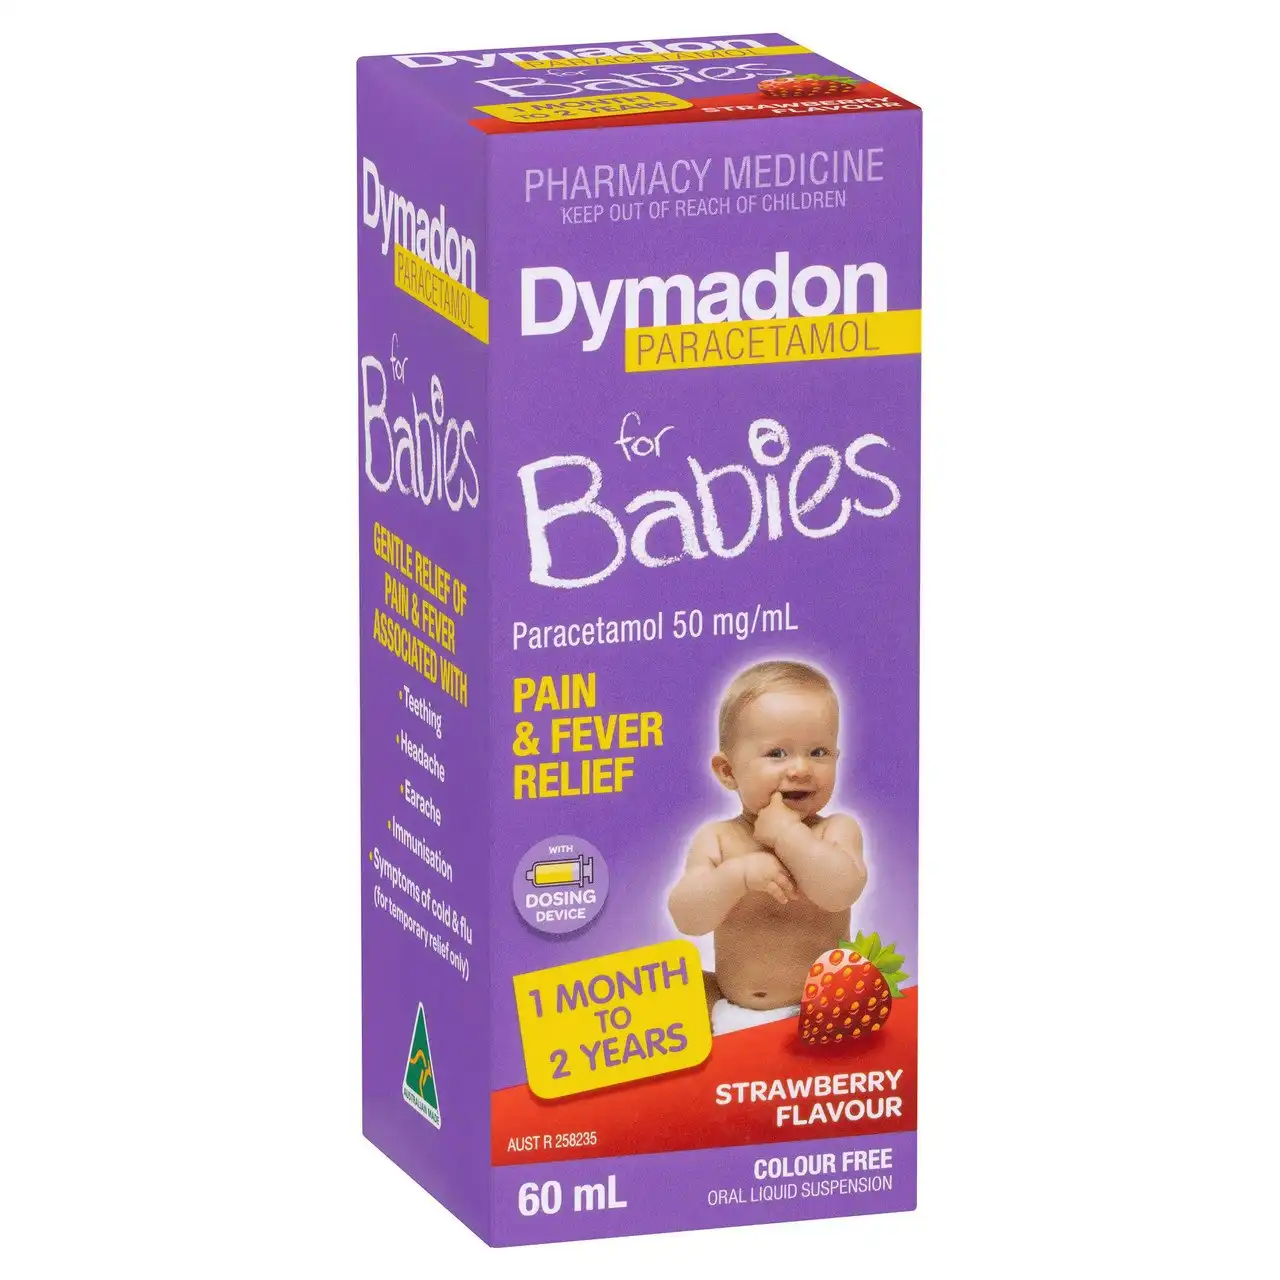 Dymadon Paracetamol for Babies 1mth-2yrs STRAWBERRY 60mL